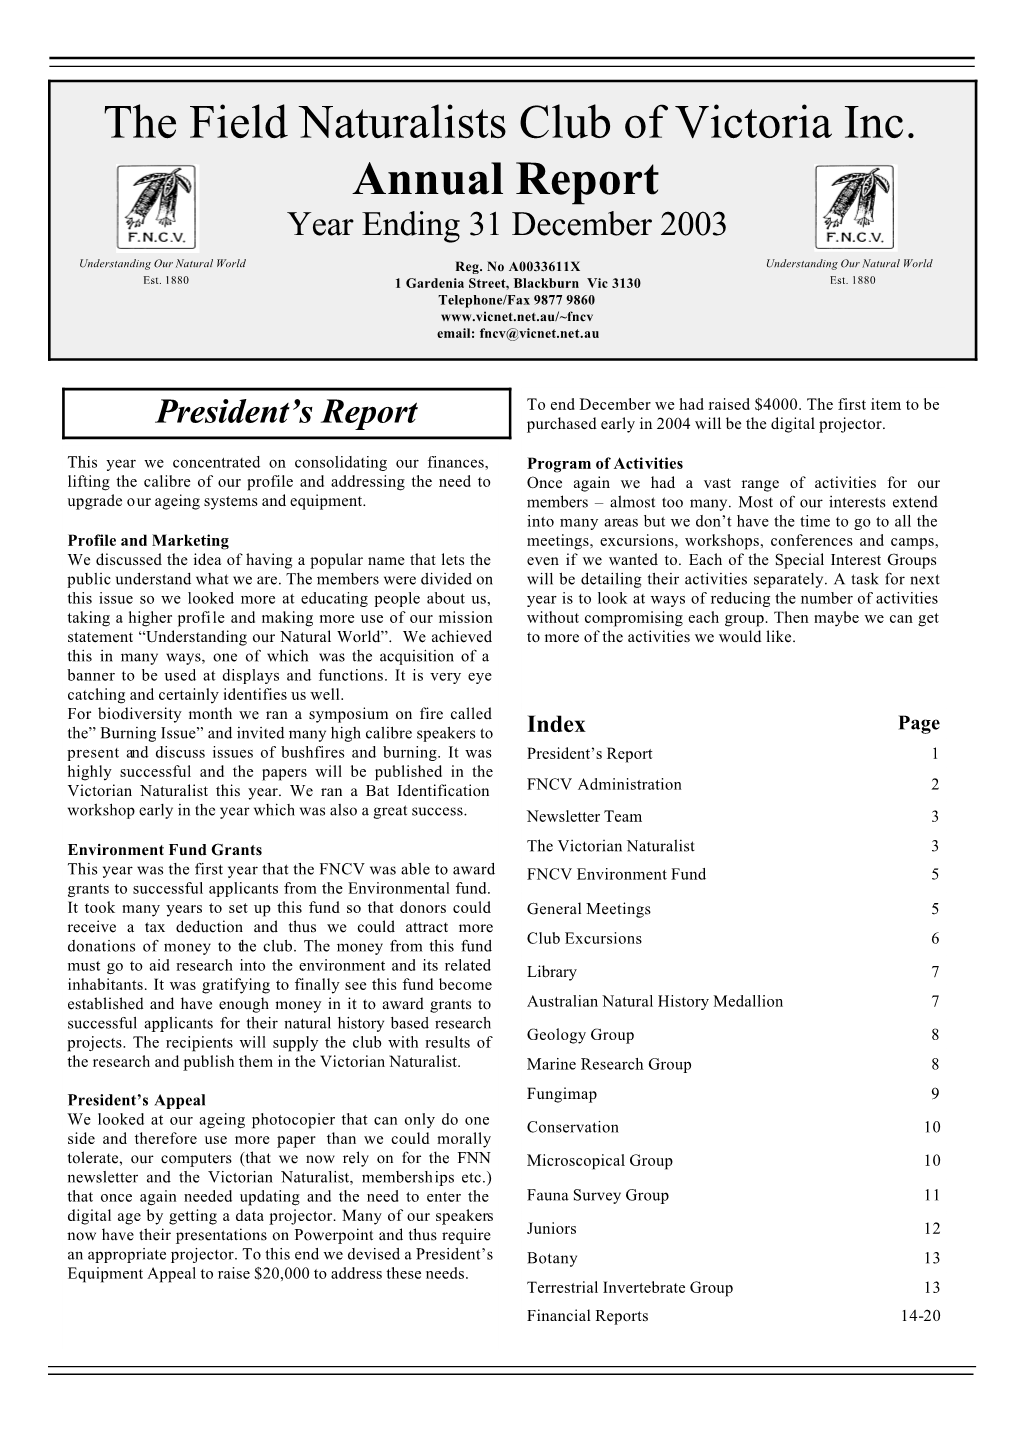 Annual Report 2003